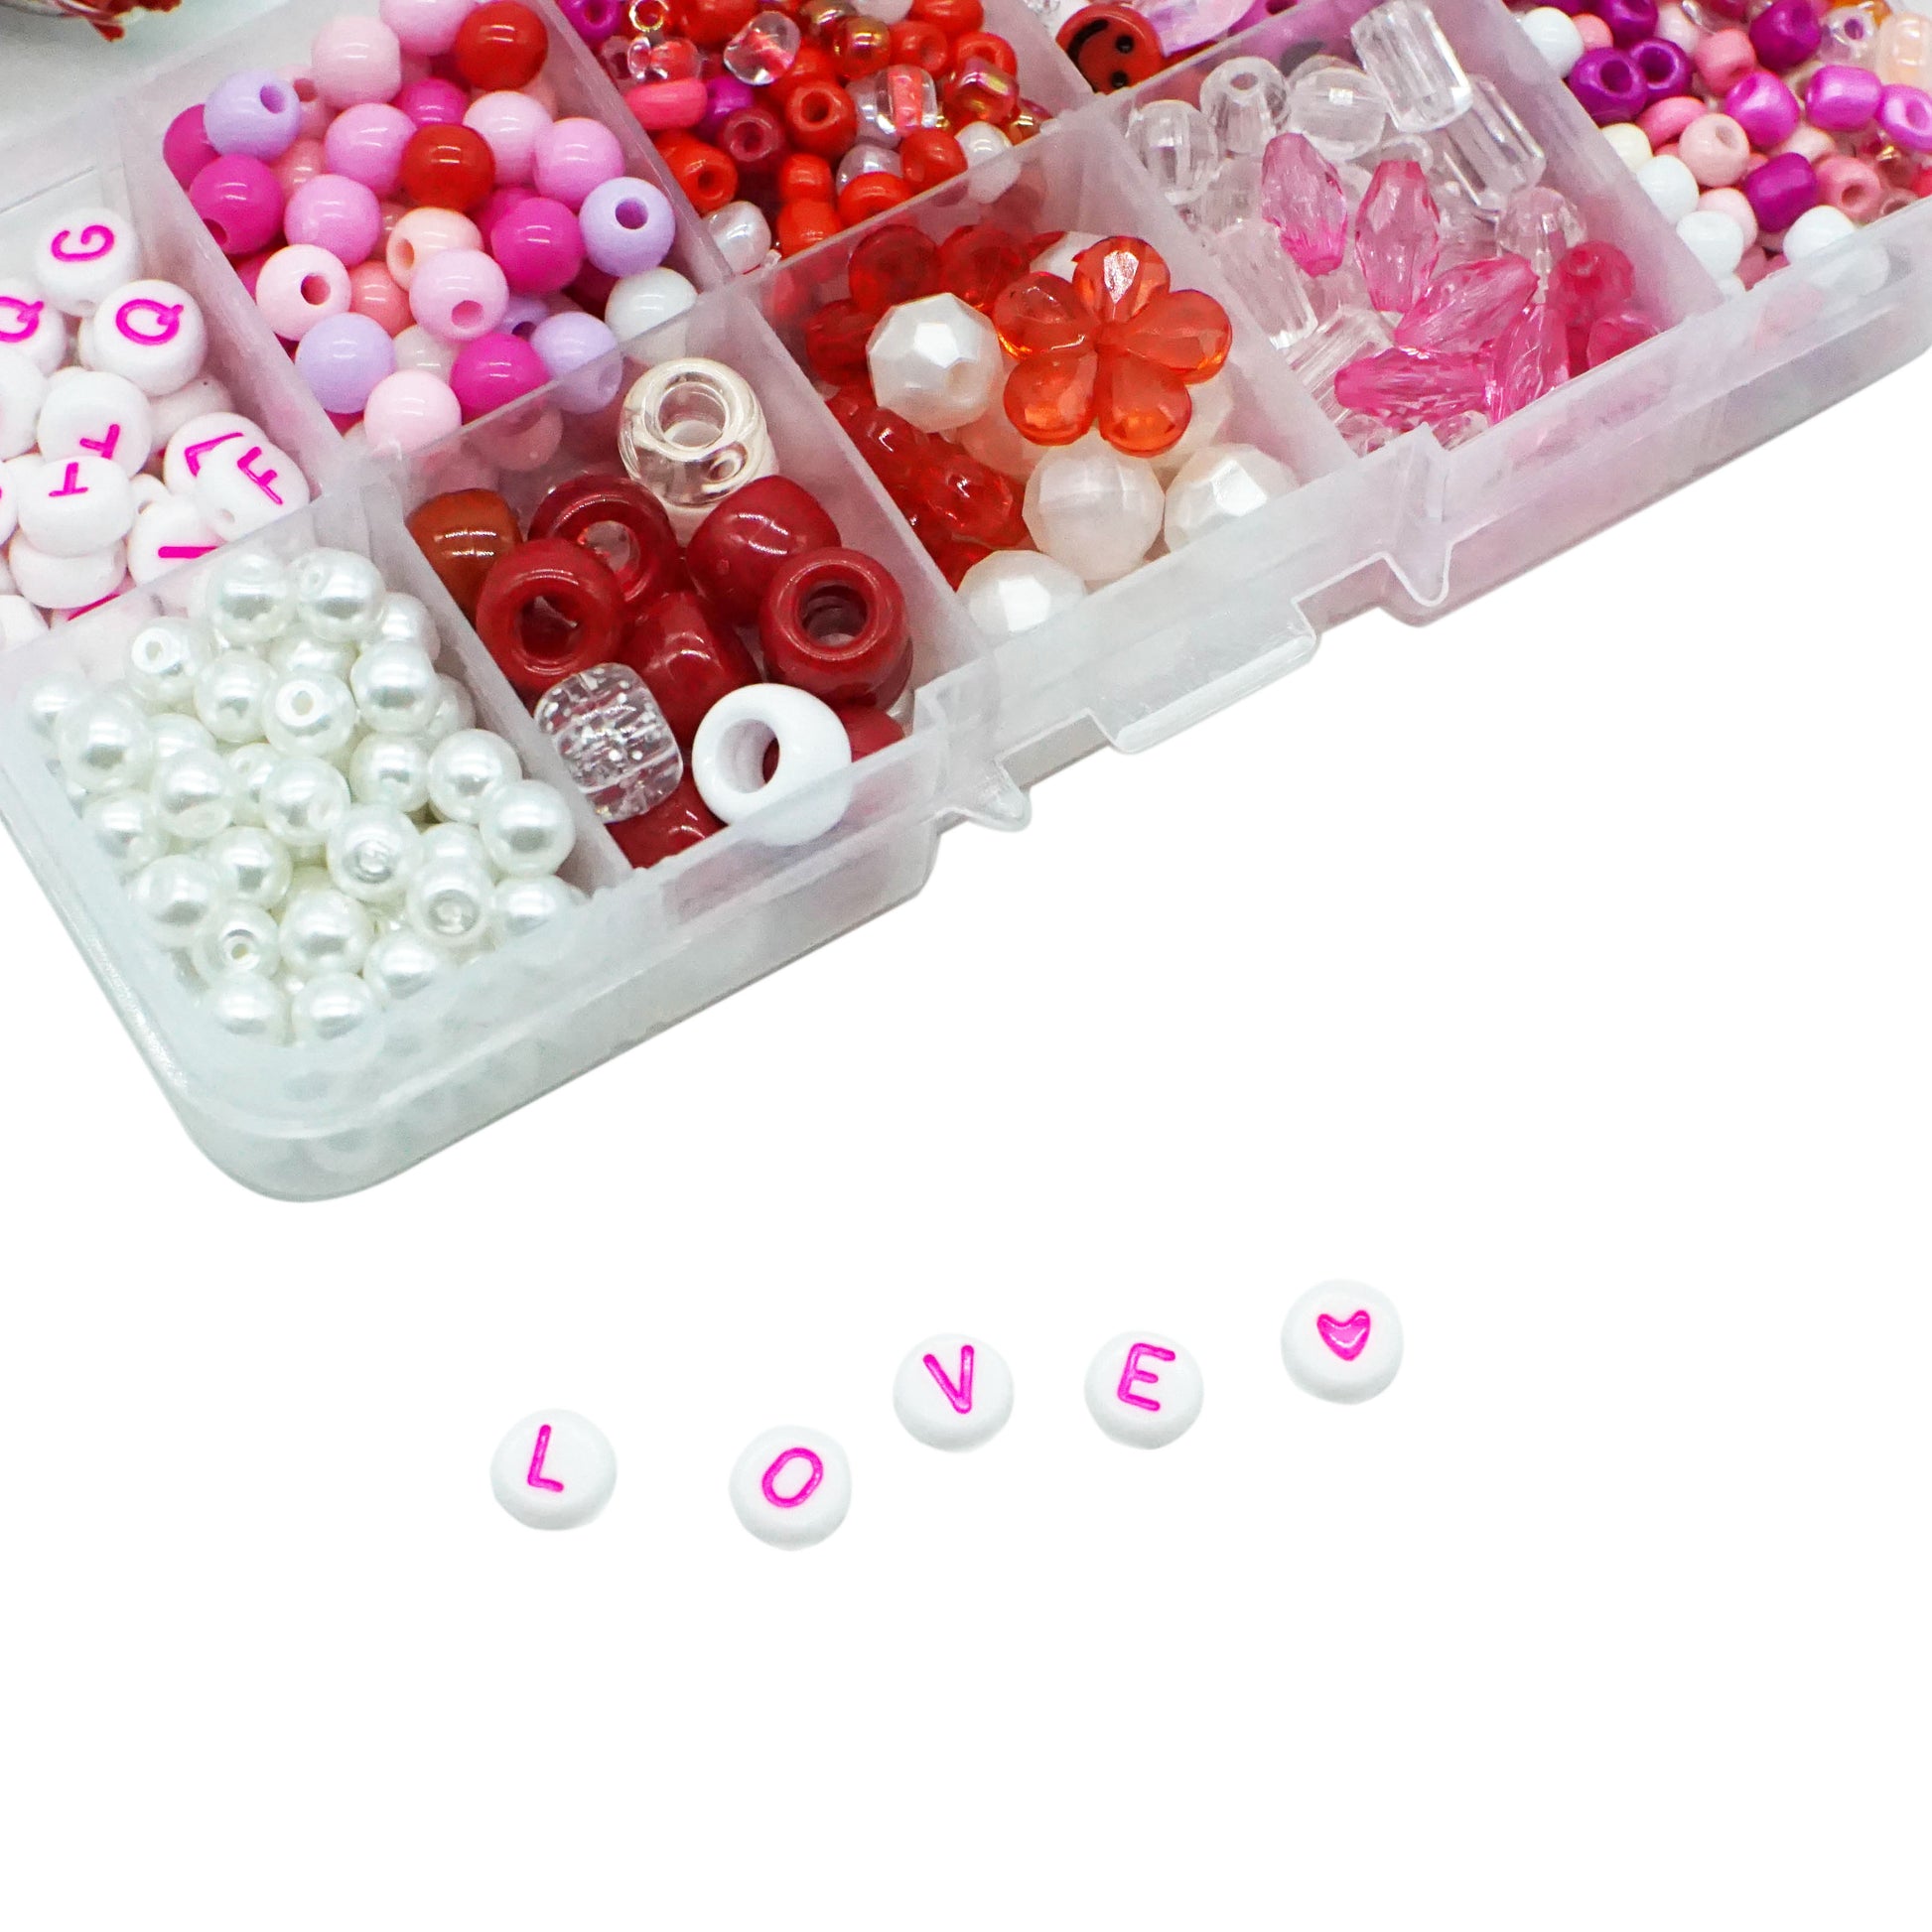 Diy Bracelet Kit - Feelin' the Love – Pink & Navy Boutique